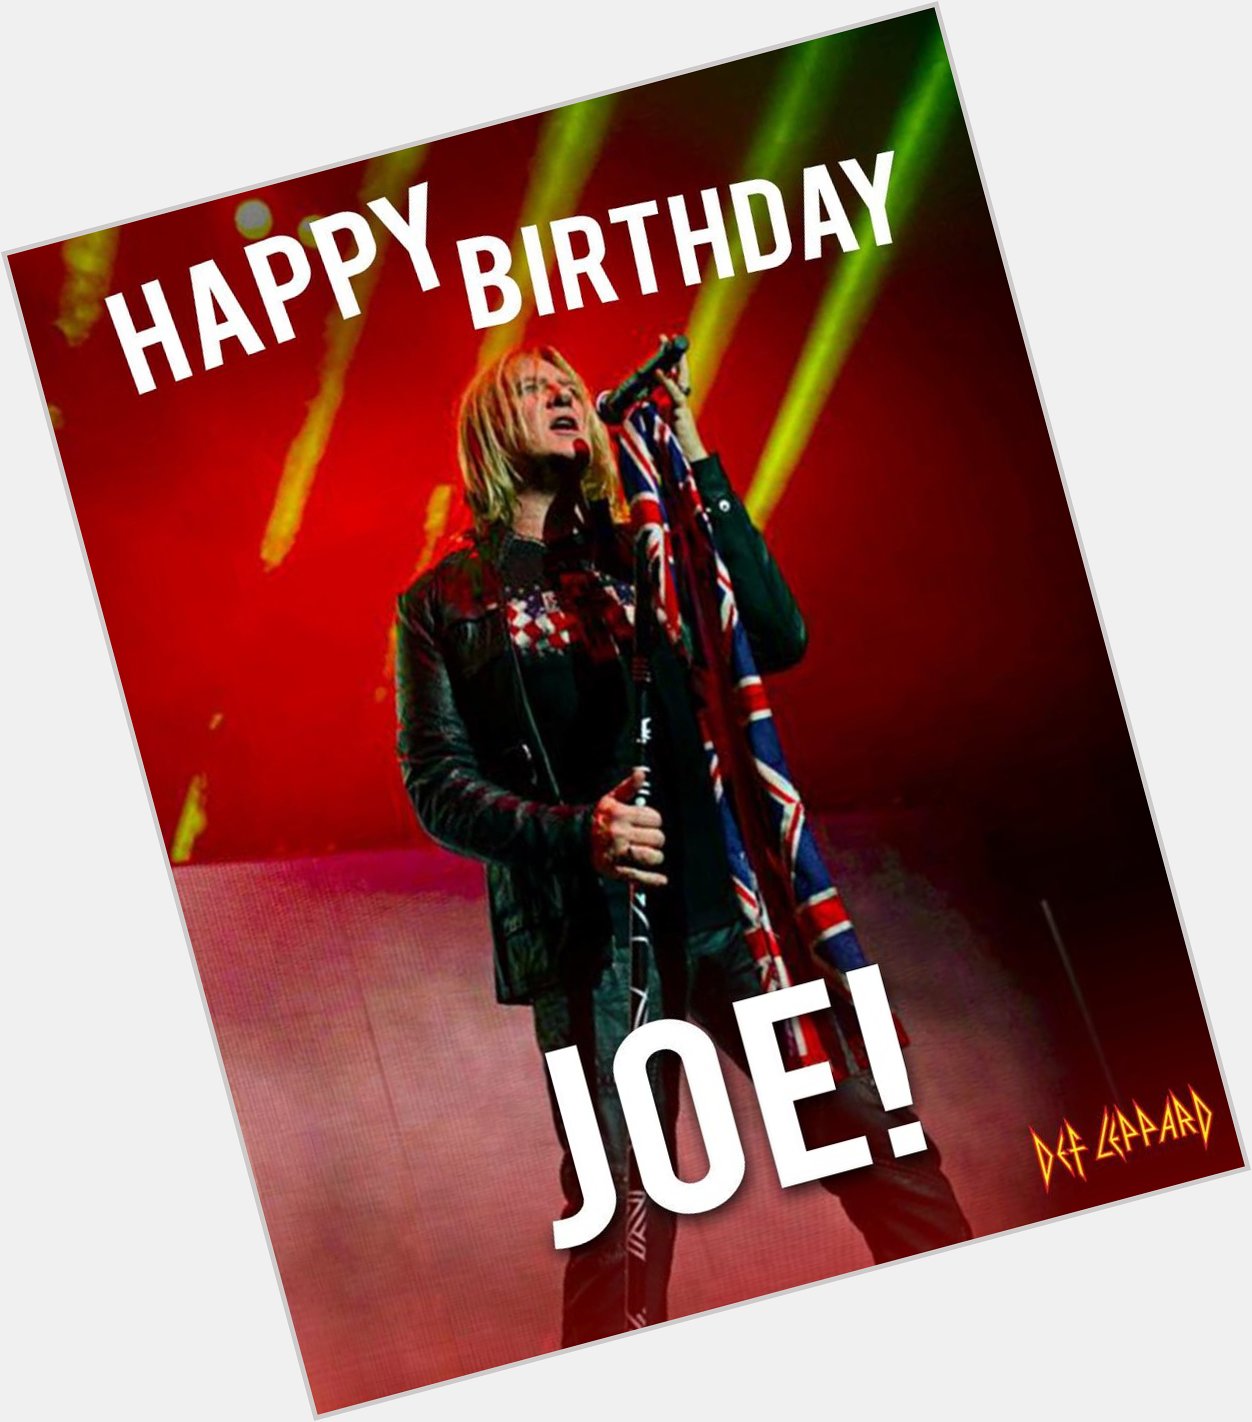 Wishing a very happy birthday today to our frontman Joe Elliott! Cheers! 